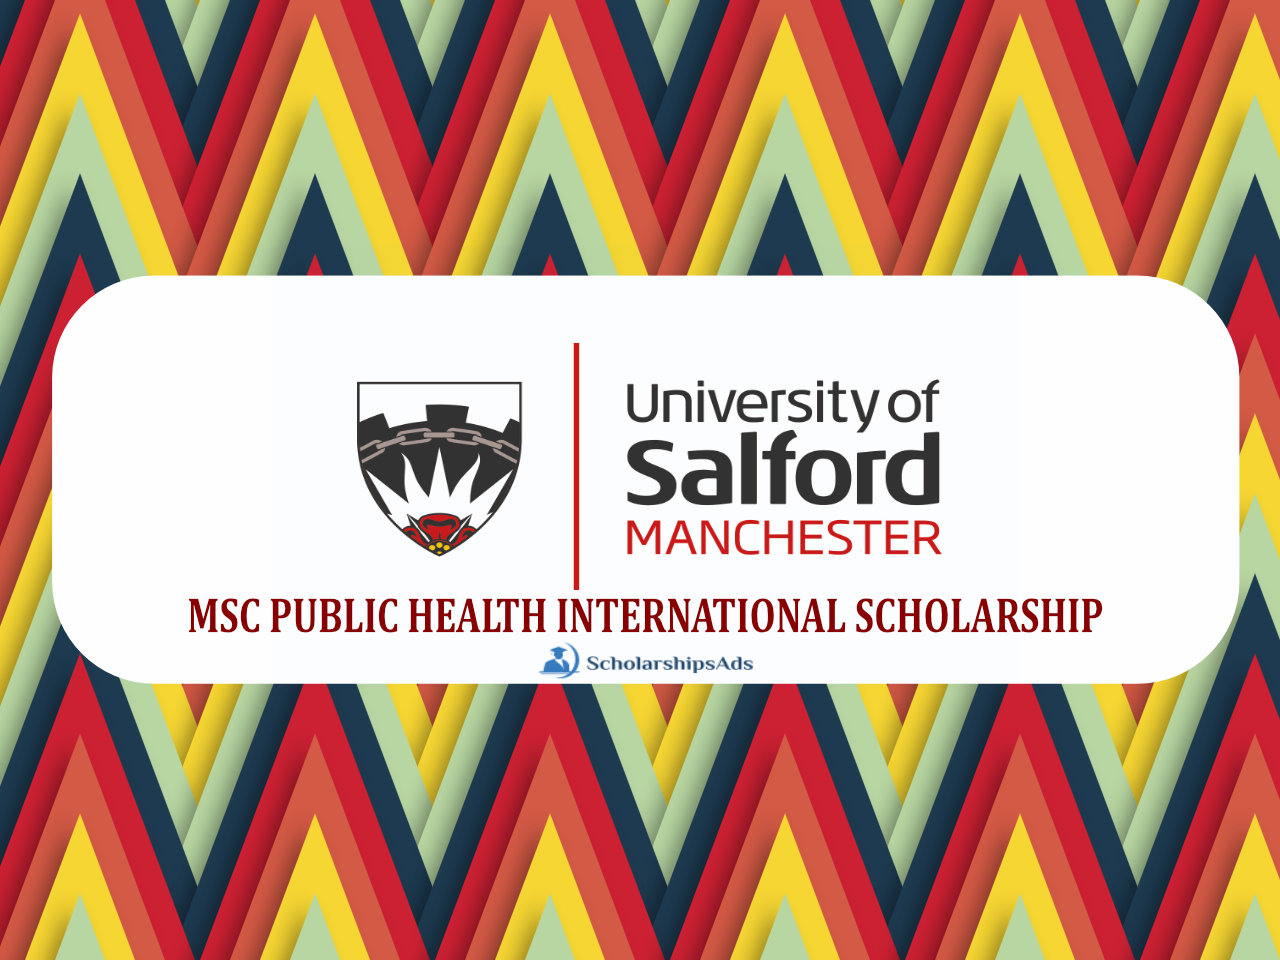 MSC PUBLIC HEALTH INTERNATIONAL Scholarships.